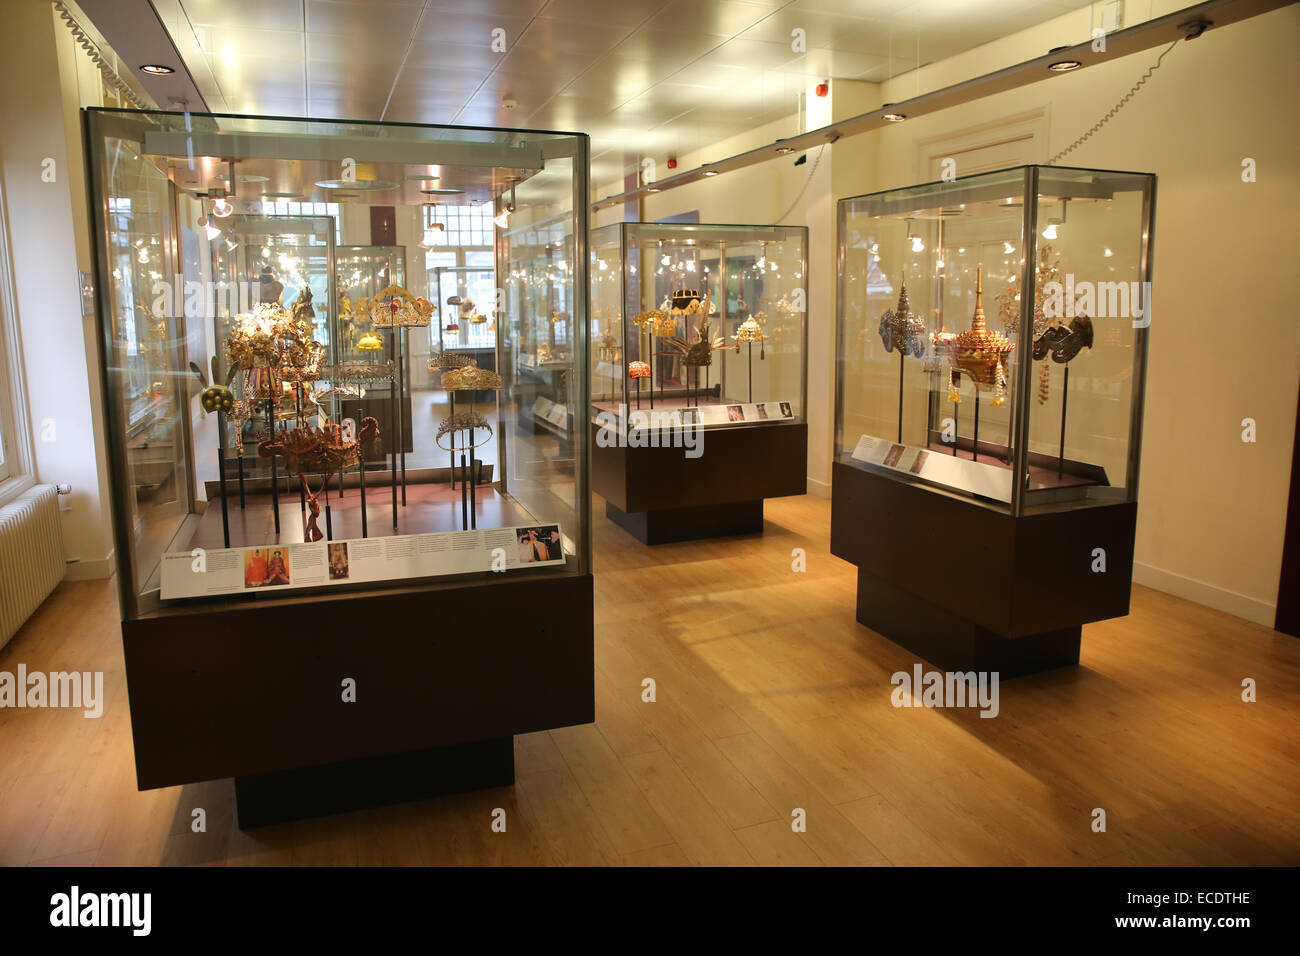 Diamond museum -Fotos und -Bildmaterial in hoher Auflösung – Alamy